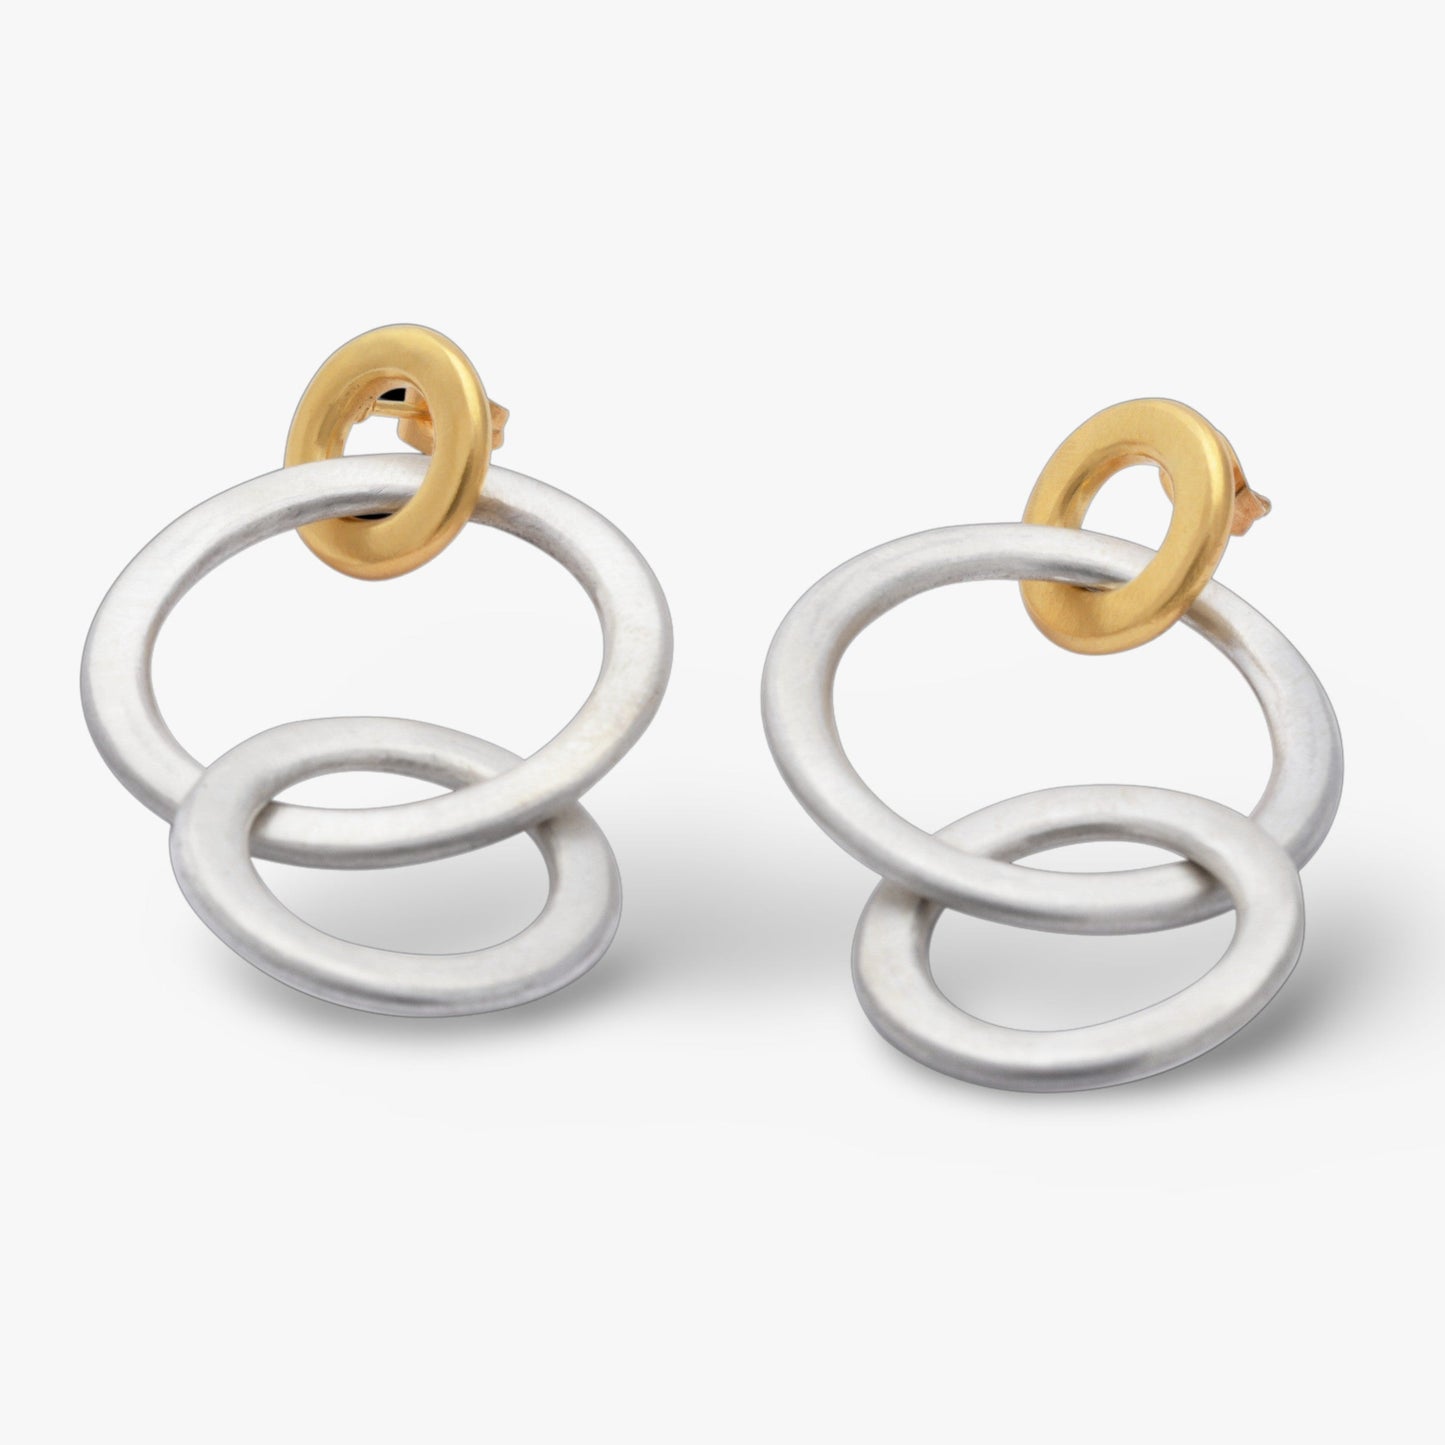 Triple Lock Circle Drop Earrings - Golden Horn